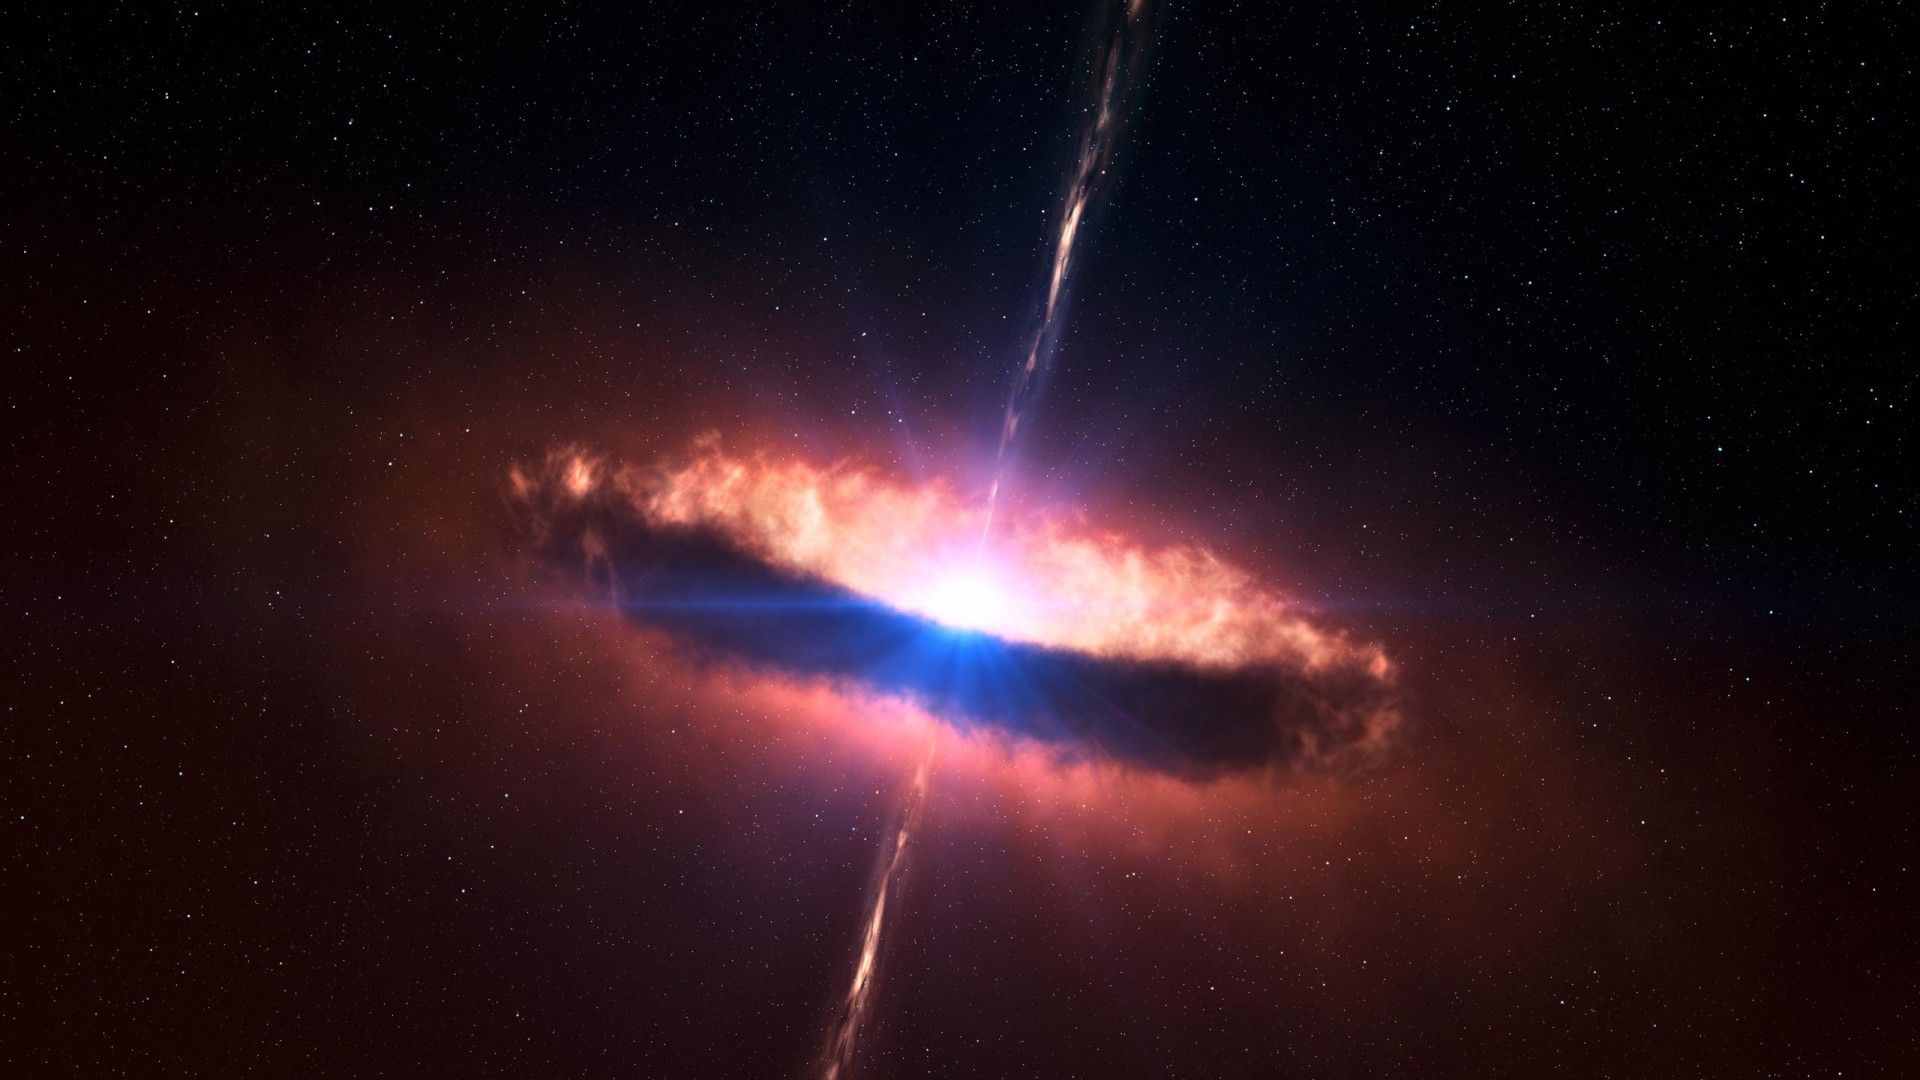 Quasar Black Hole HD Wallpaper 1920x1080 ID48873